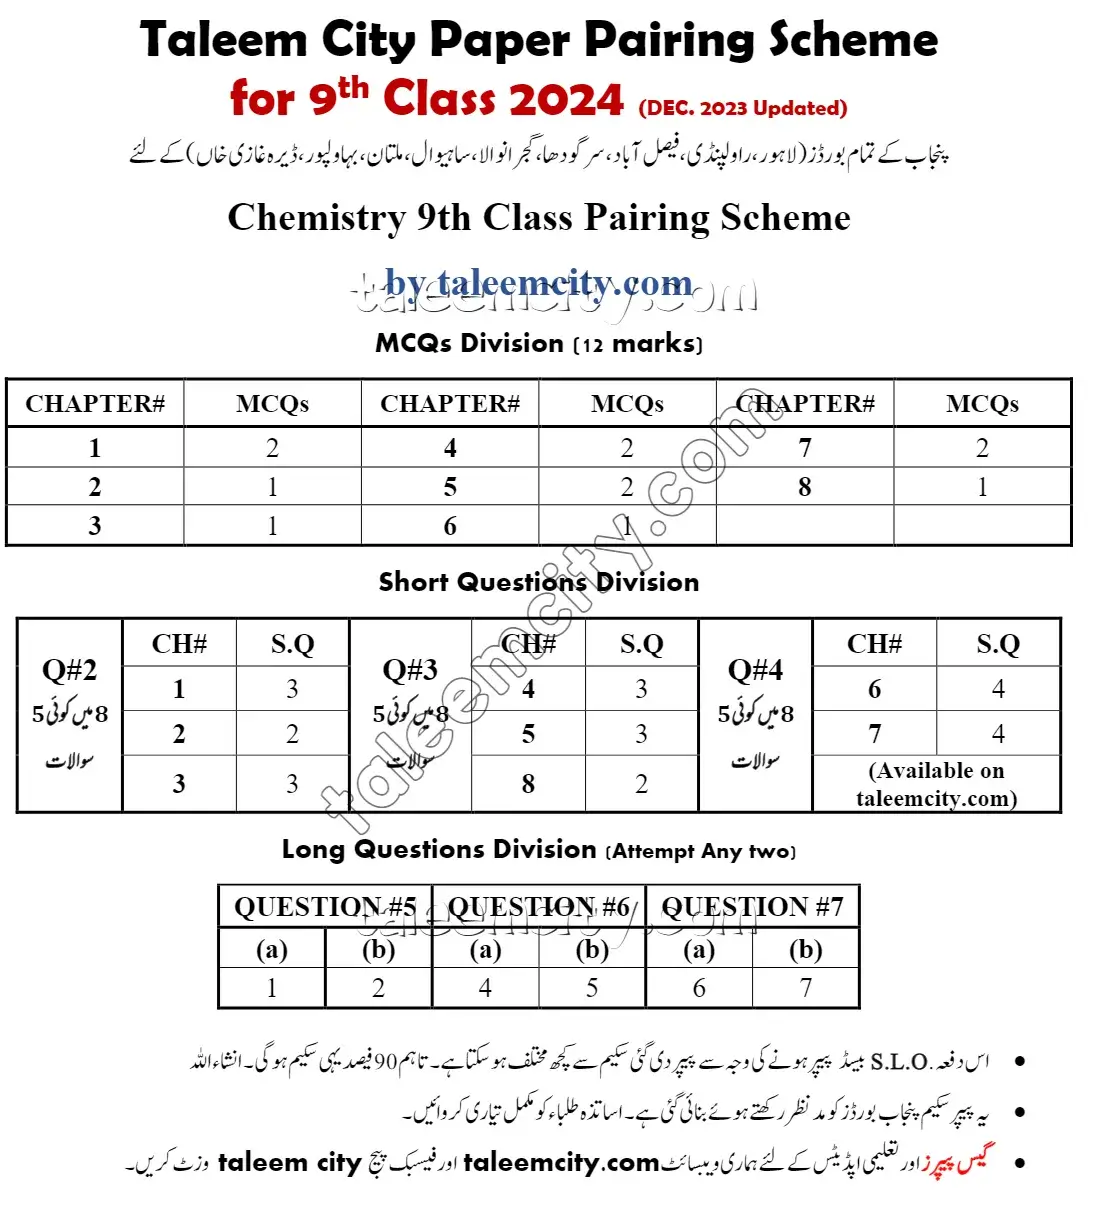 9th Class Chemistry Pairing Scheme 2024 - Taleem City